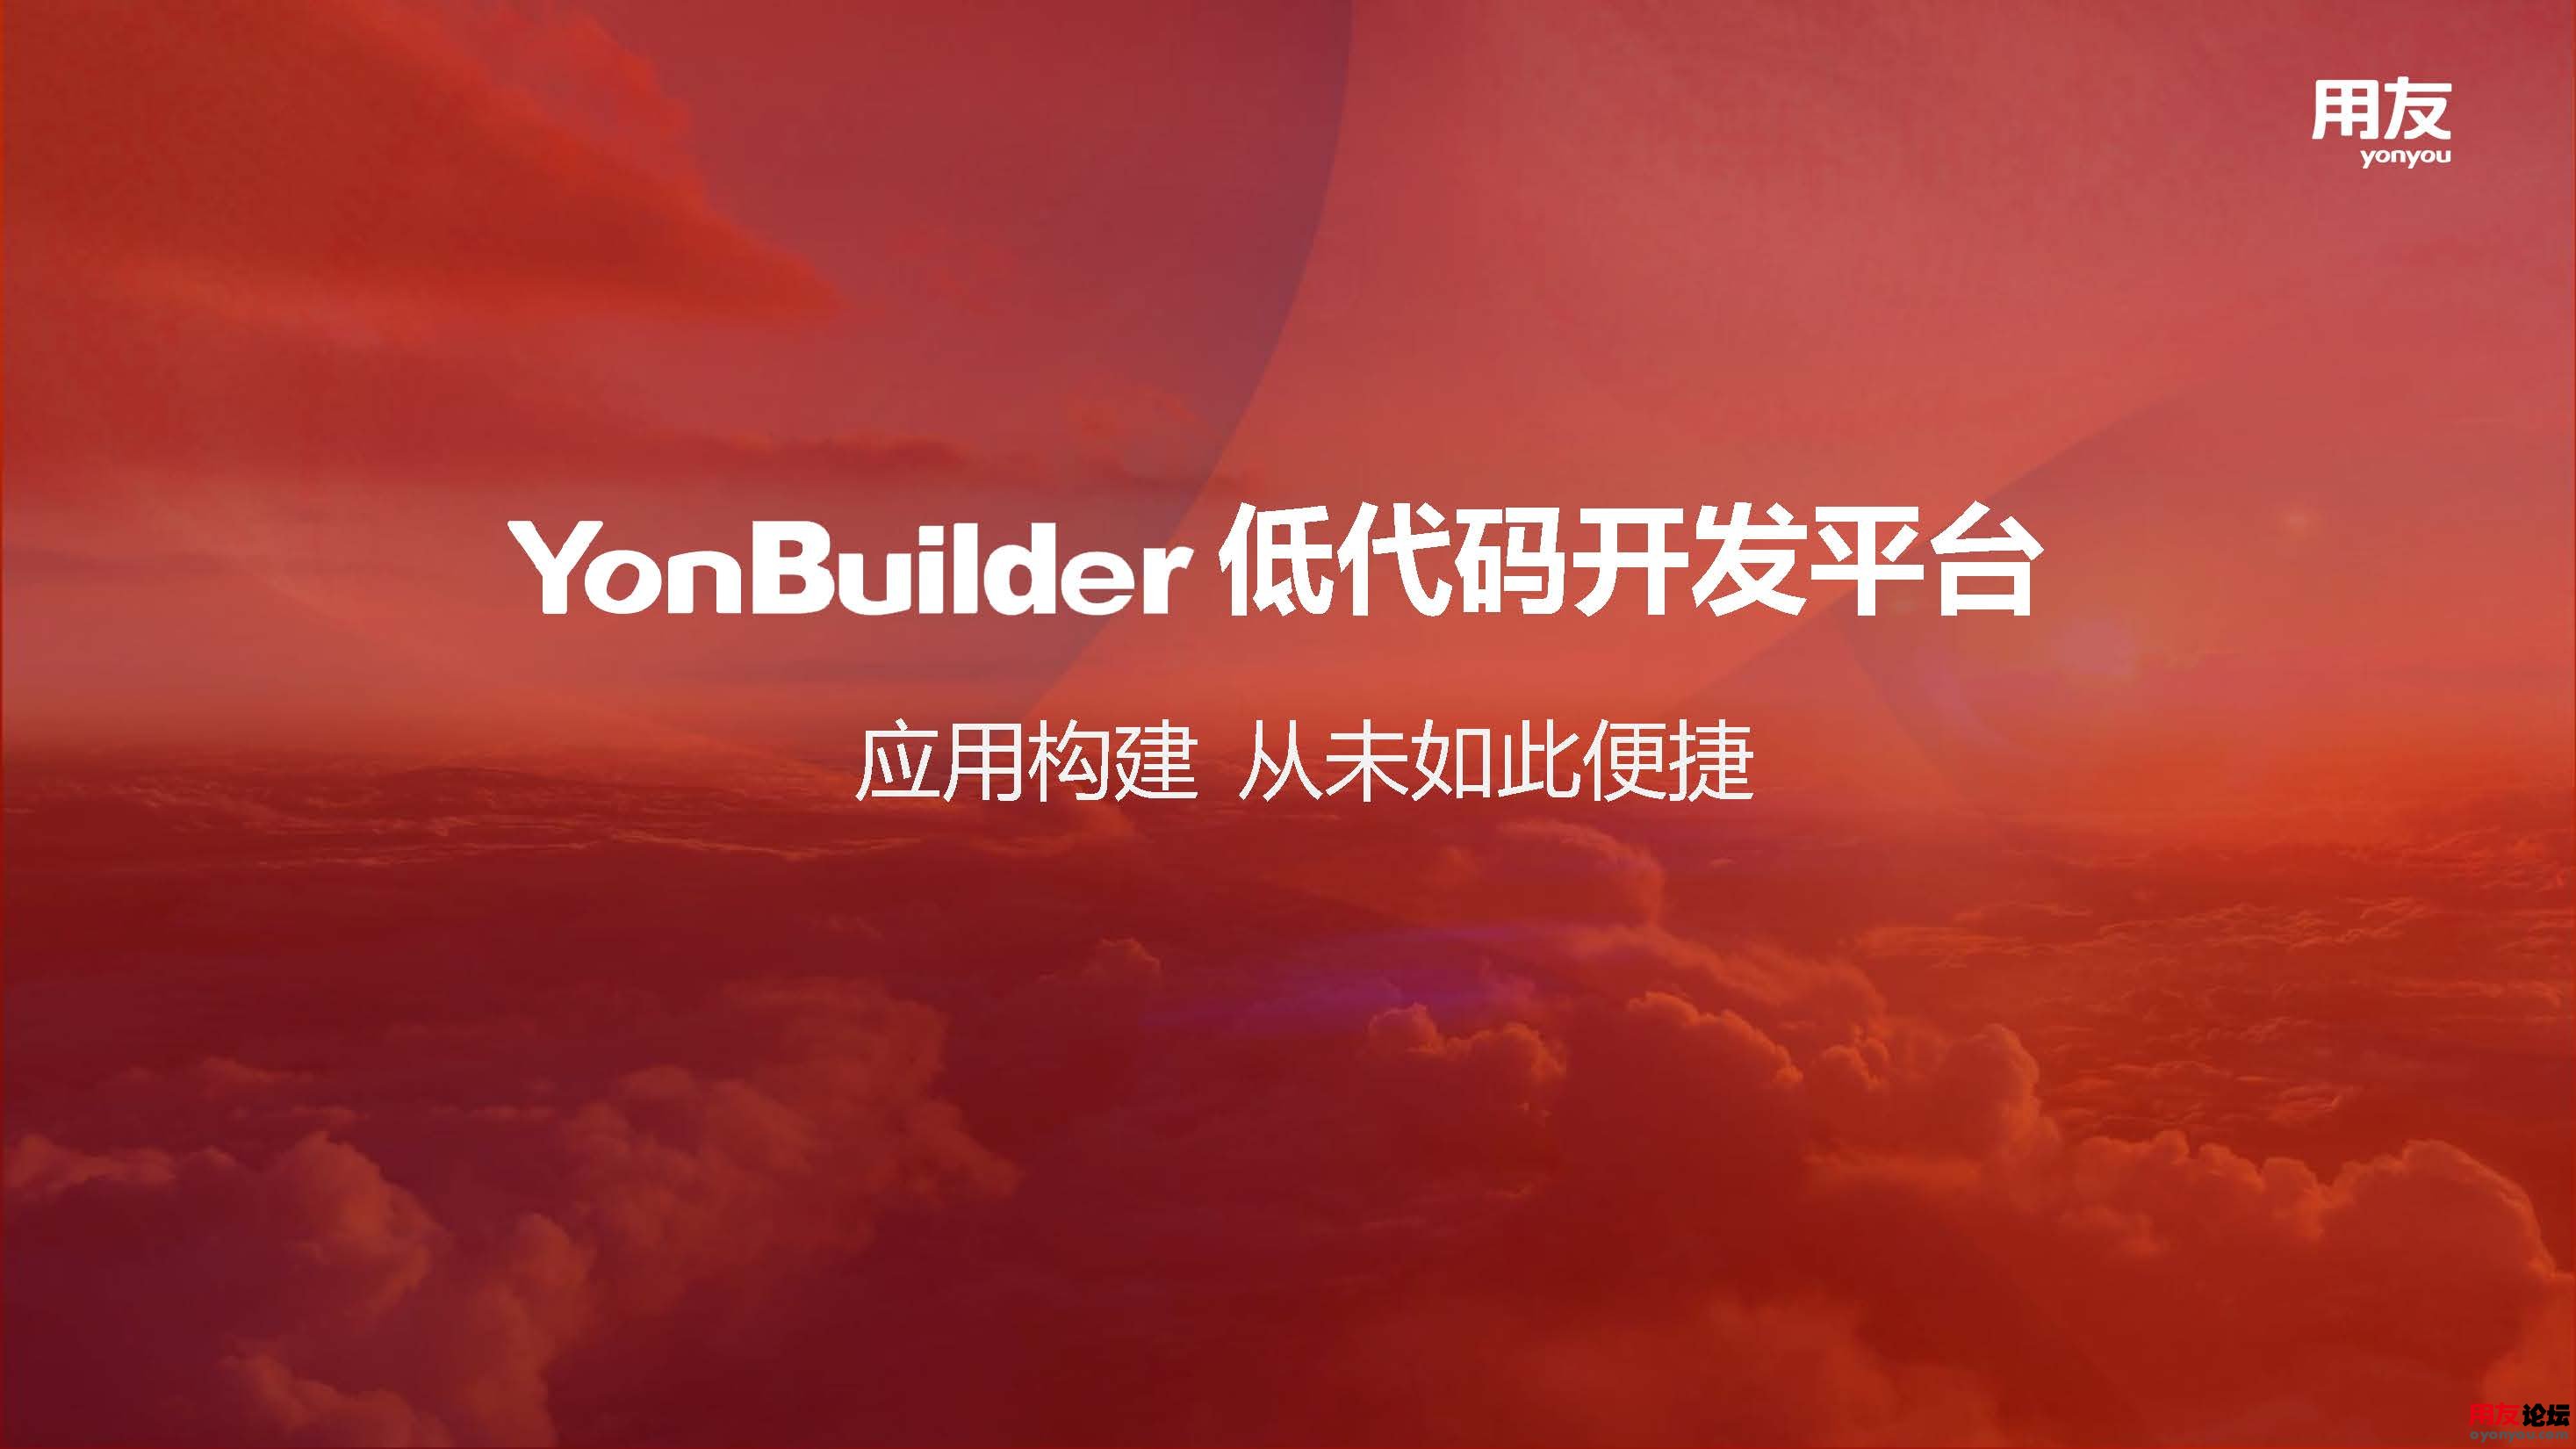 YonBuilder产品介绍2021版_页面_01.jpg